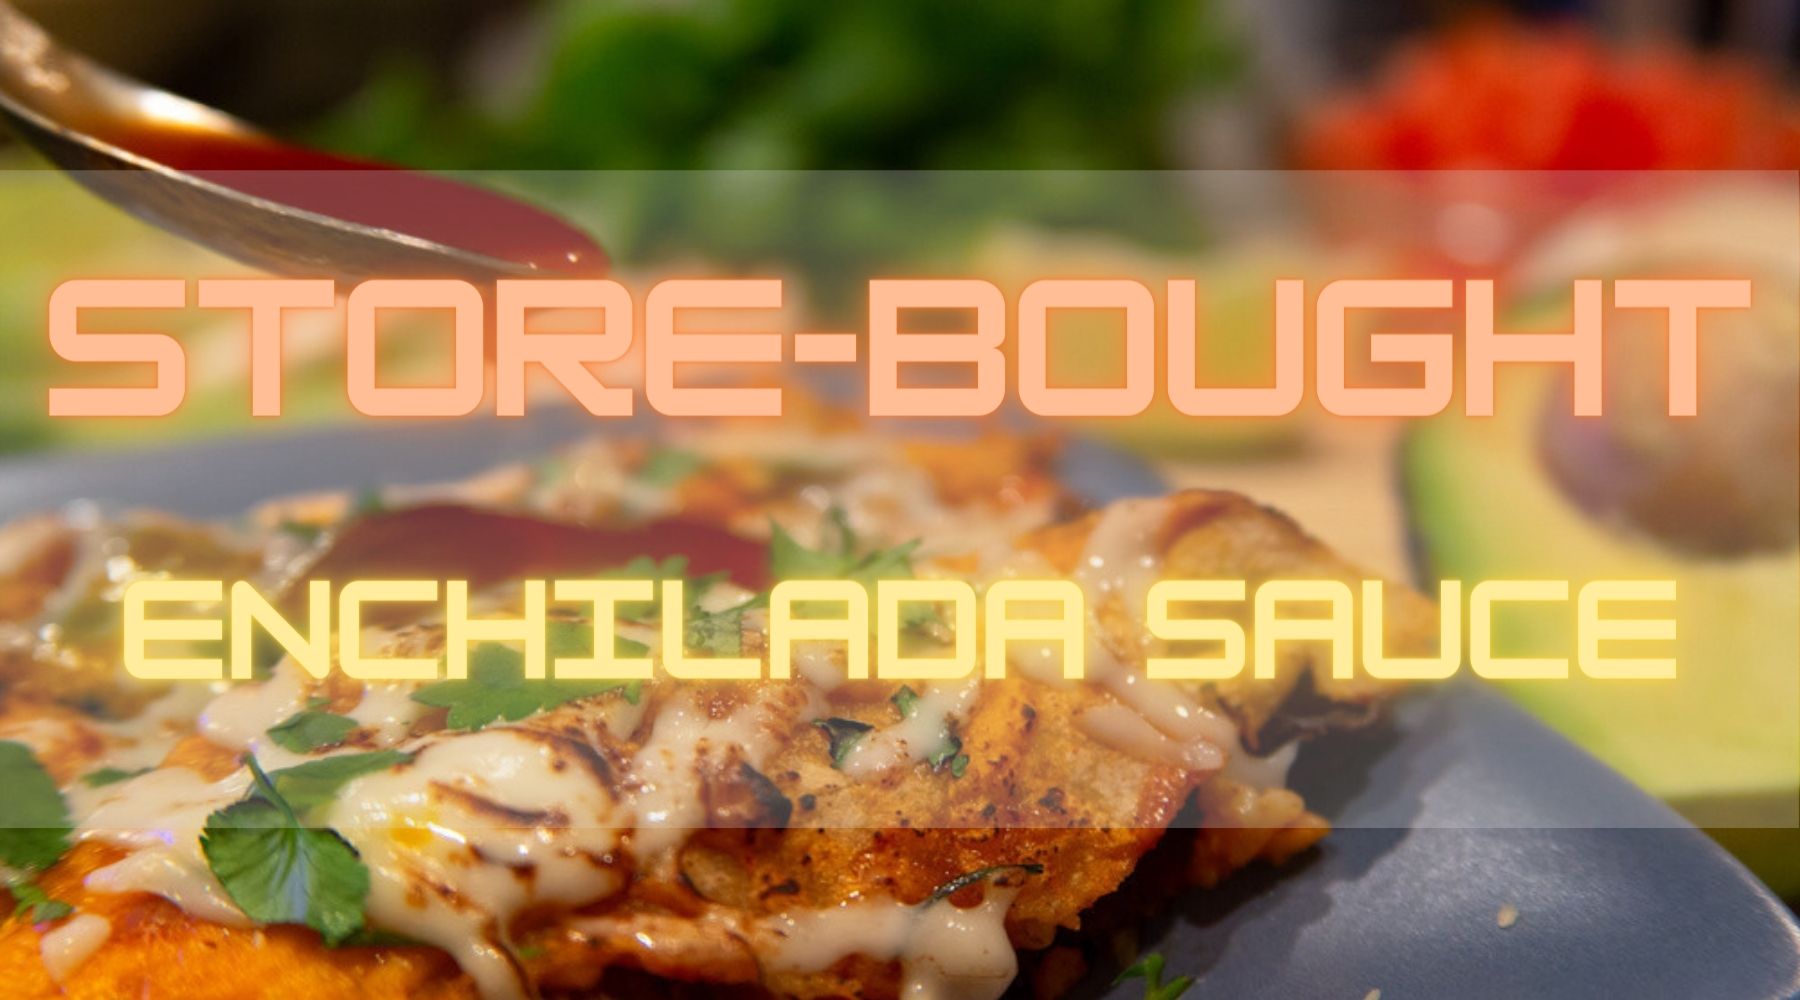 Best Store-Bought Enchilada Sauce